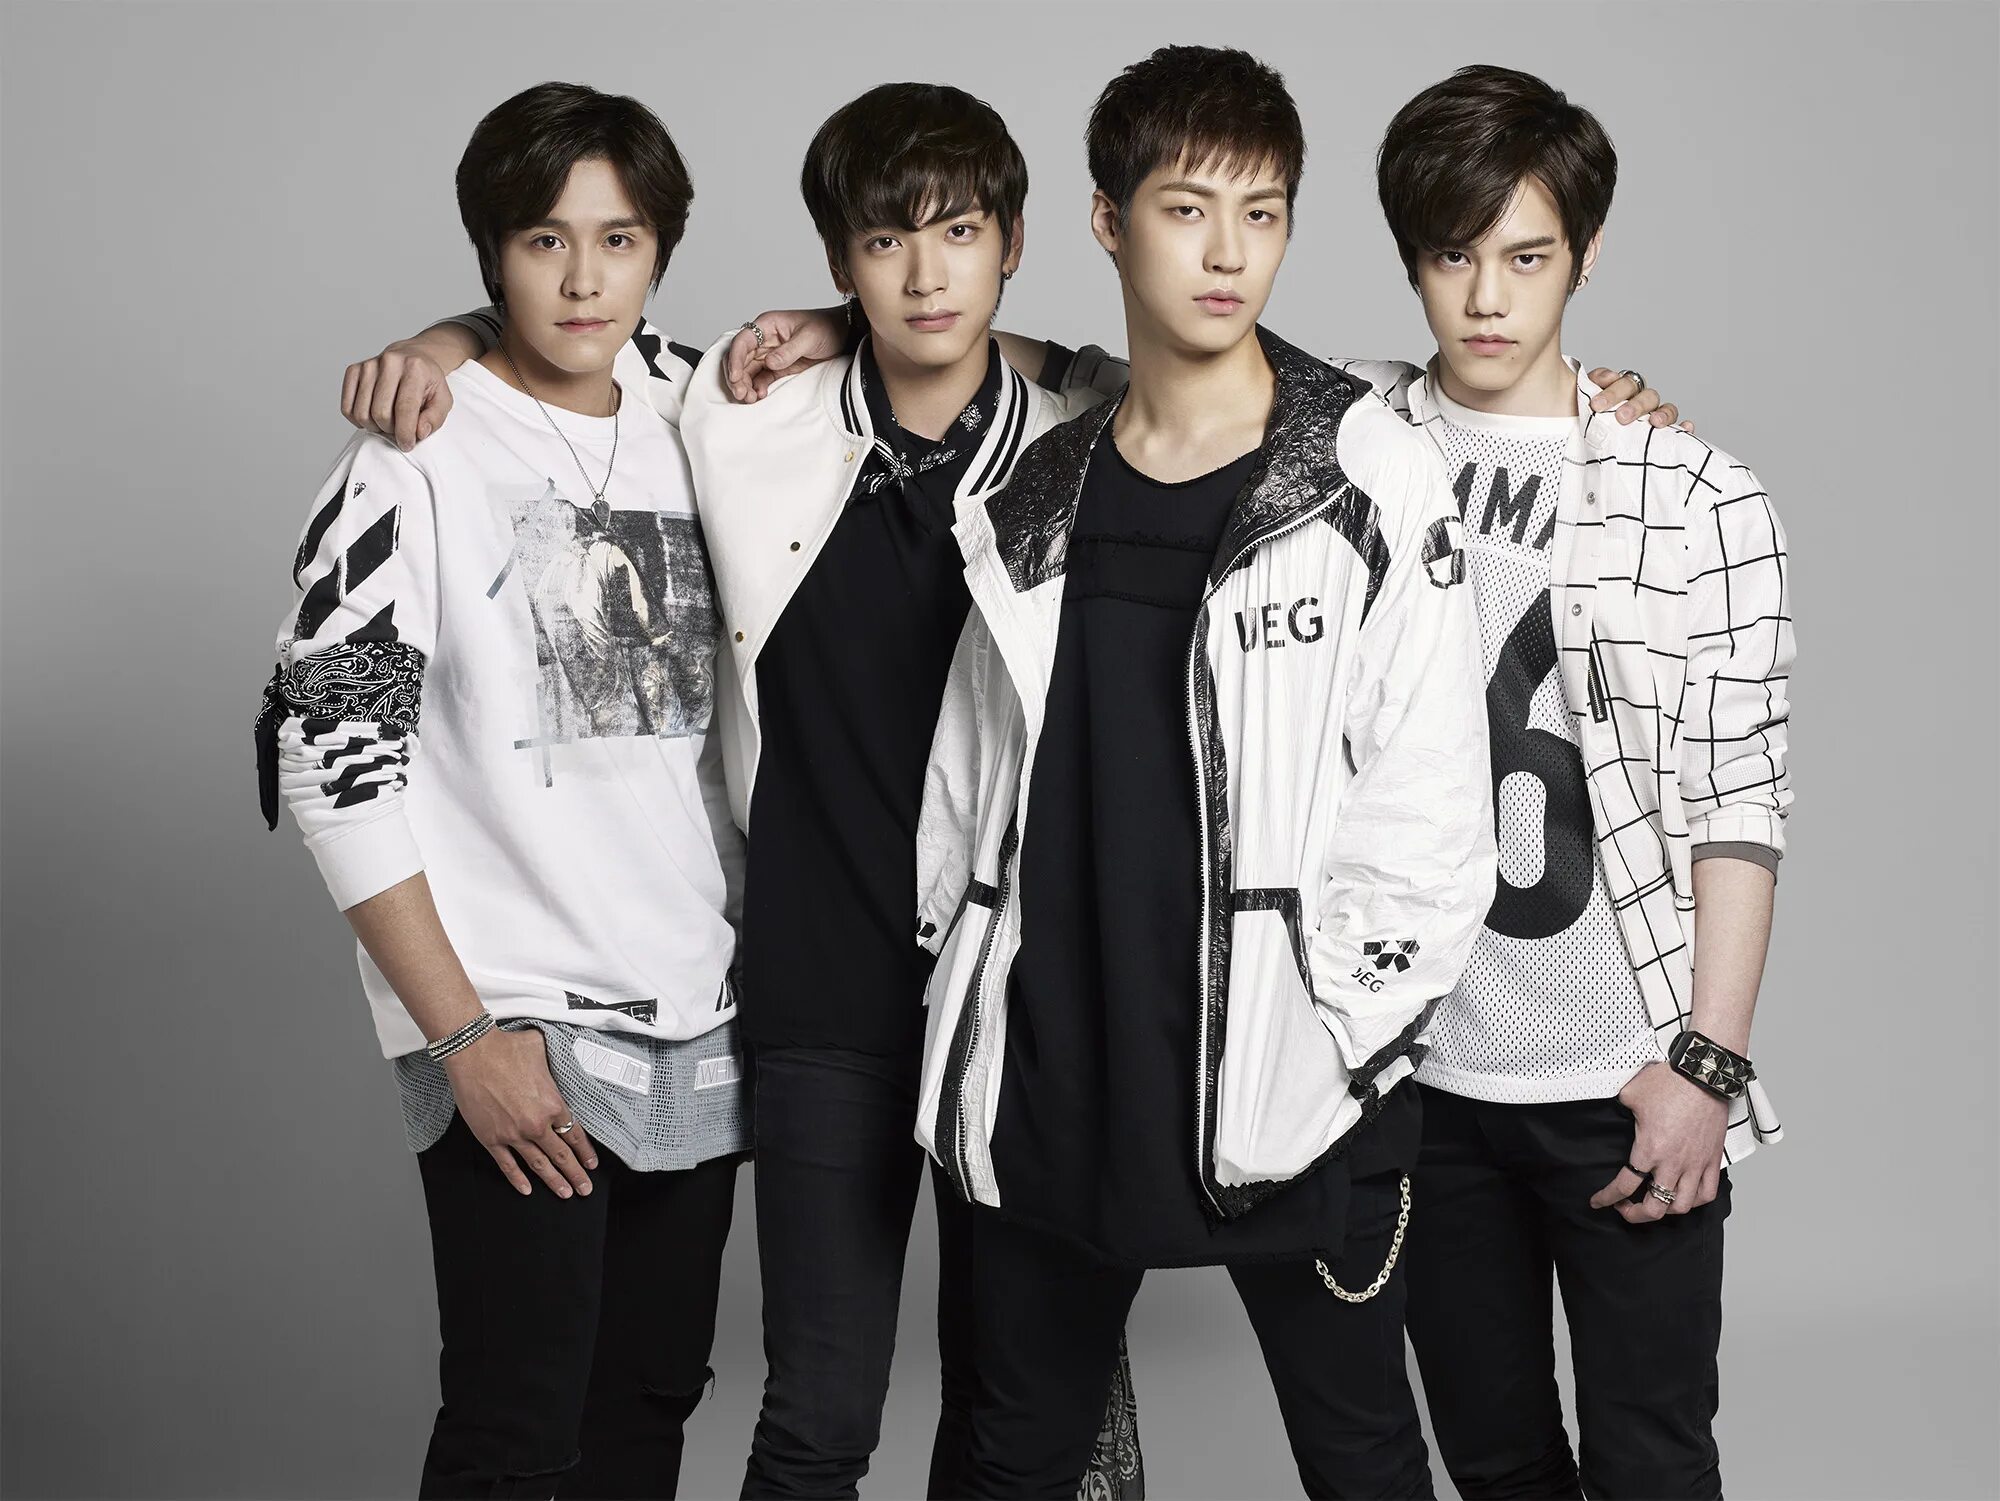 CNBLUE корейская группа. 1/N корейская группа. Корейская группа Mix 9 биография. Флай группа корейская.